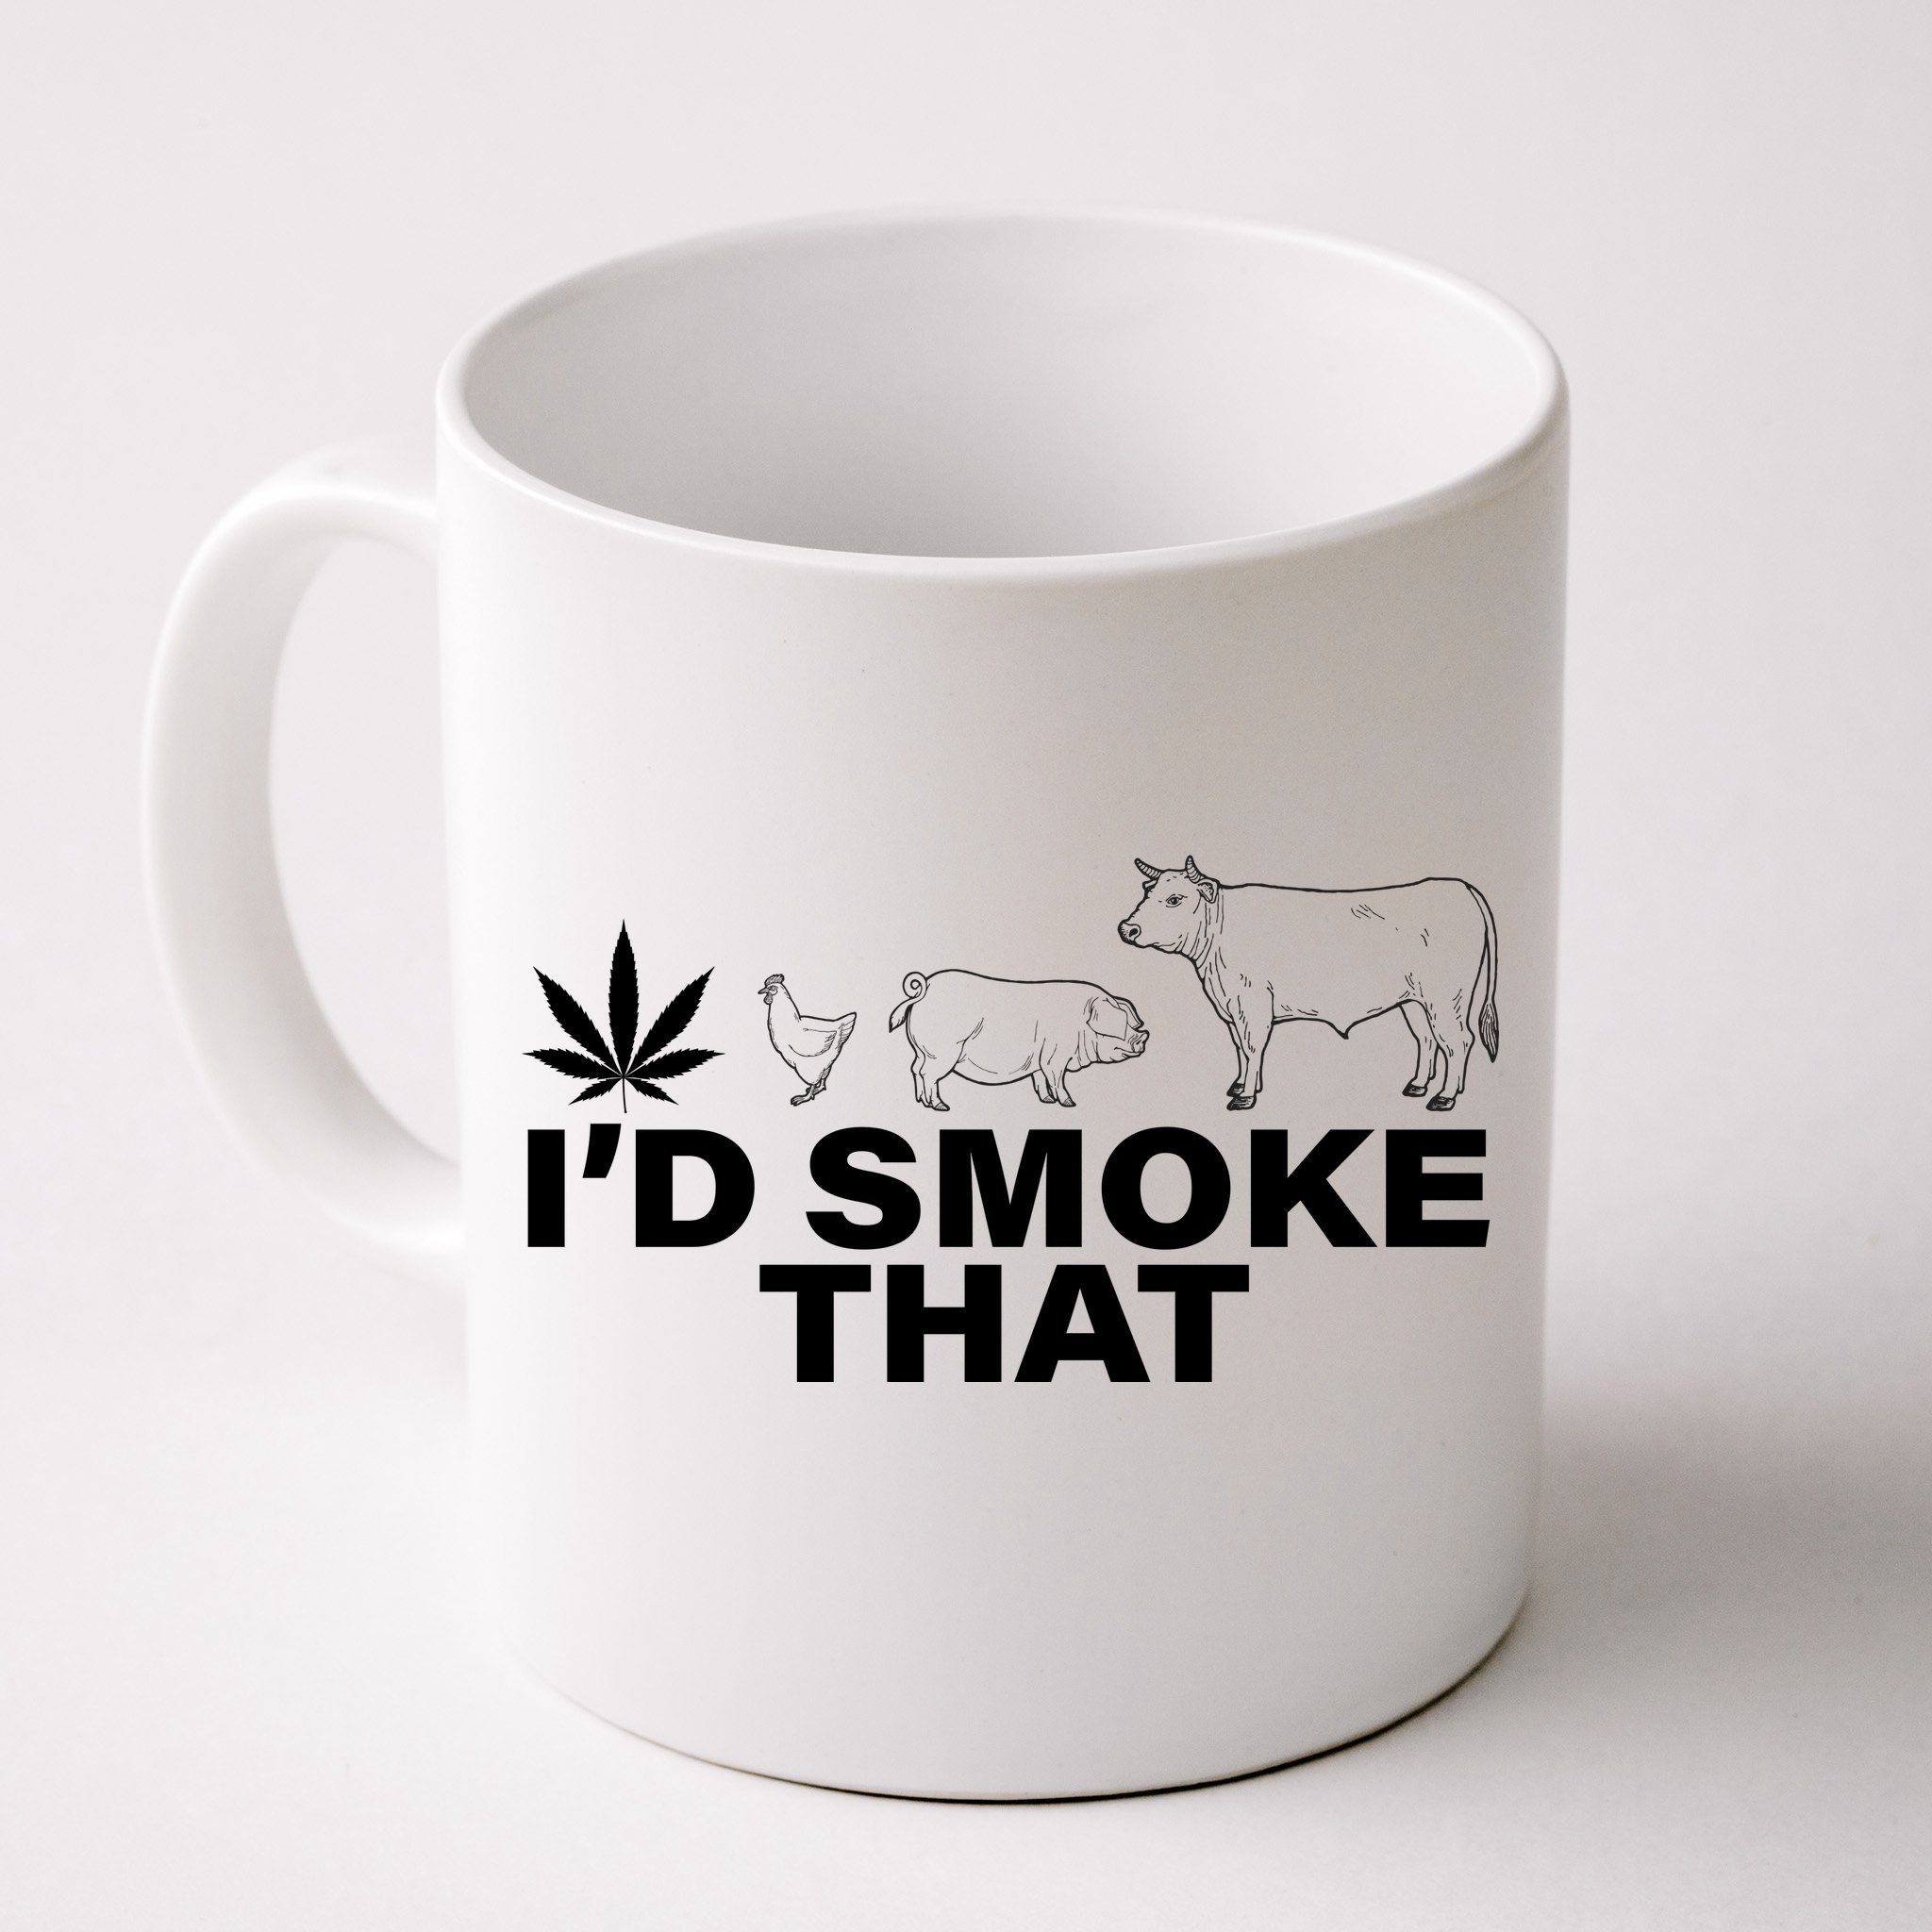 I'm So High Right Meow Cannabis Cat White Ceramic 15oz Coffee Mug Tea Cup Kush Marijuana Weed 420 Baked Funny Punny Cat Jokes Bud Sesh Pot